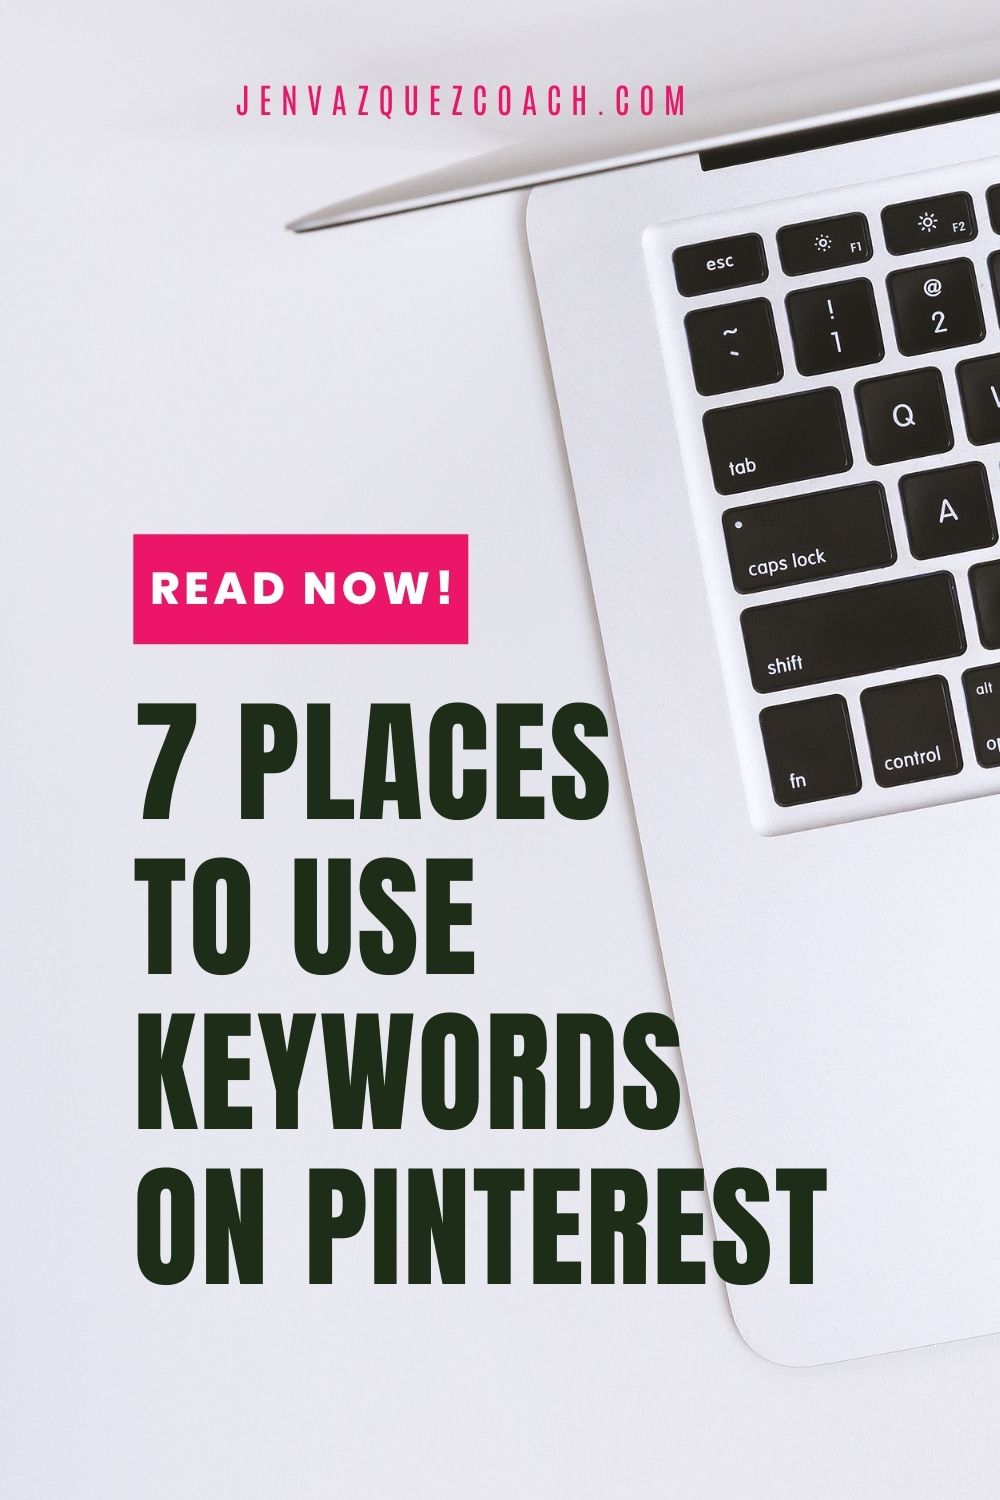 7 places to use keywords on Pinterest by Jen Vazquez Pinterest marketing expert